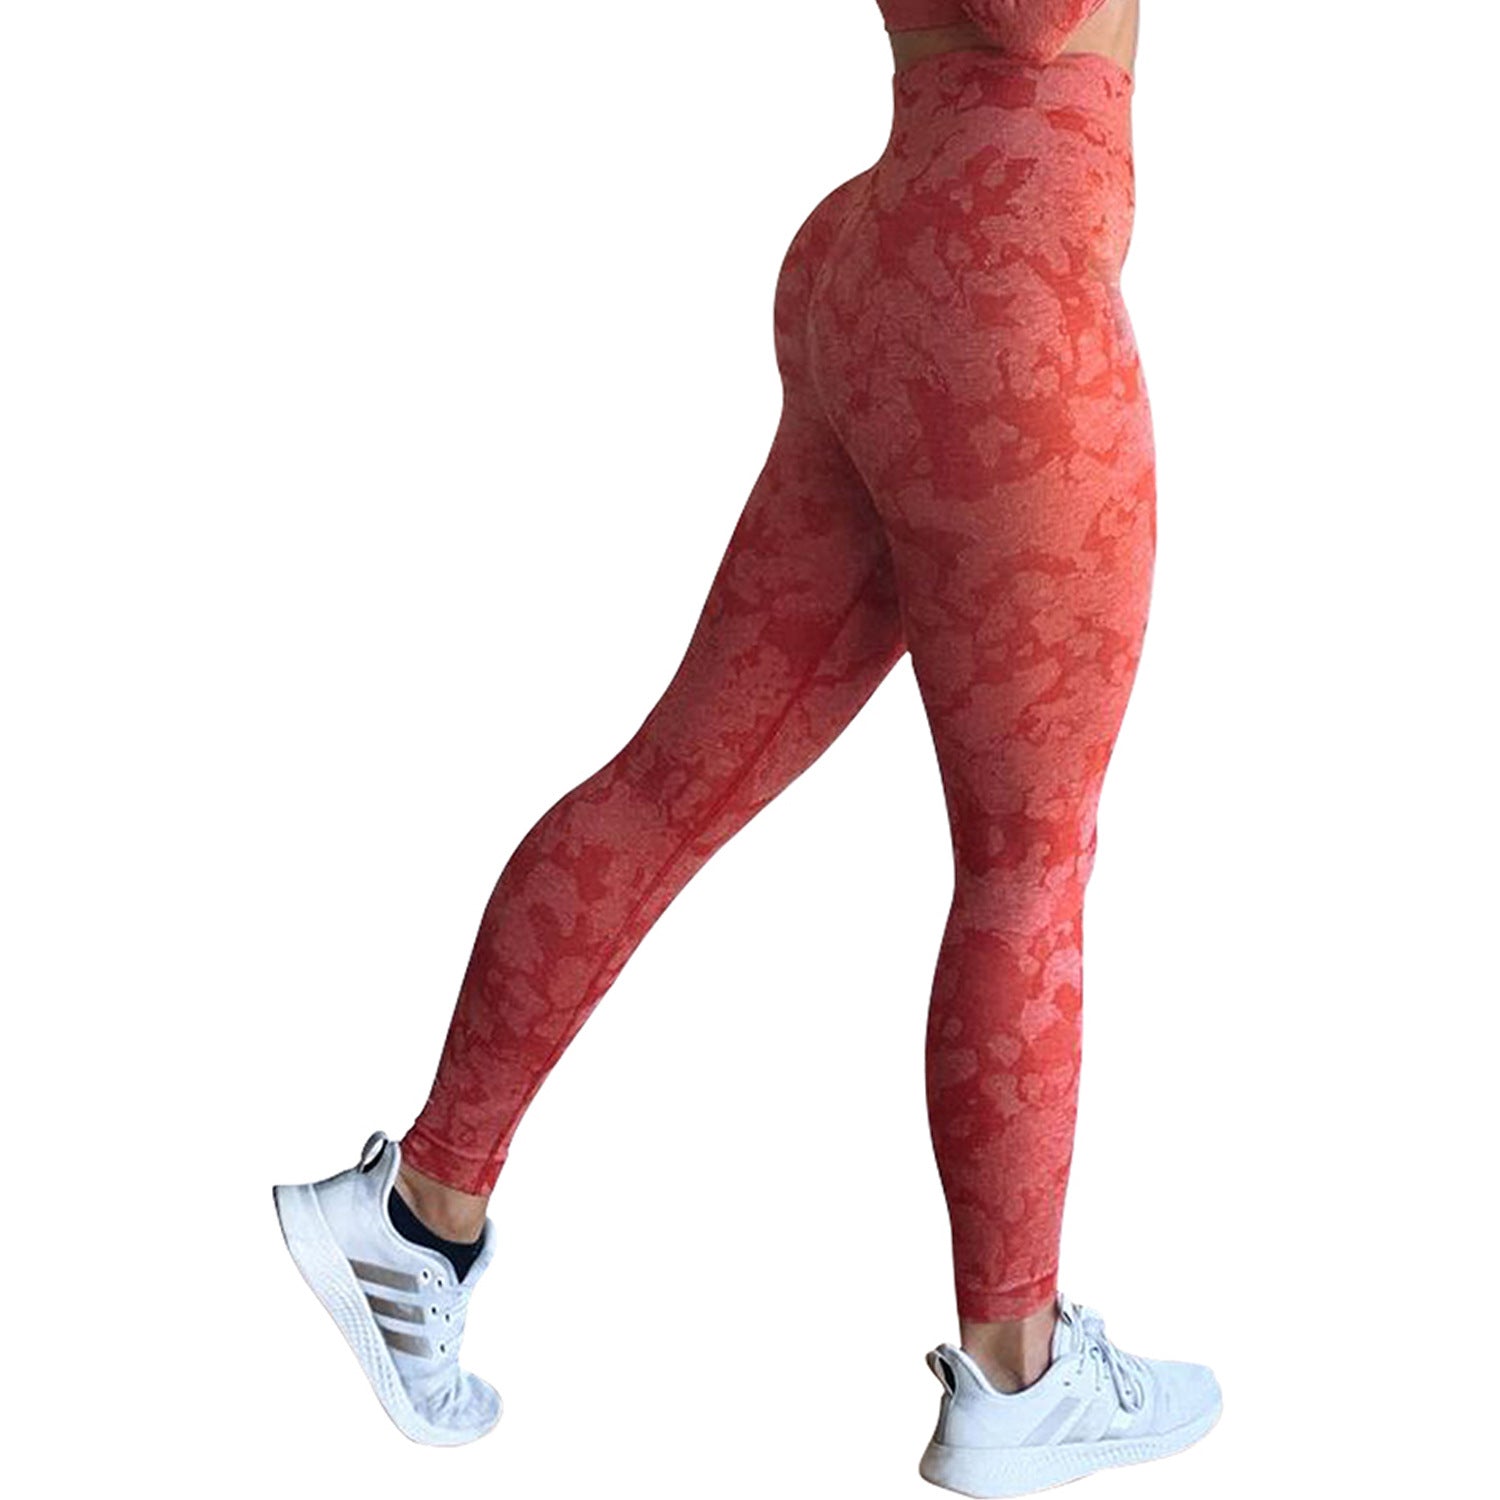 Buy CFR Women Workout Leggings High Waist Scrunch Peach Butt Lifting Tummy  Control Gym Sport Fitness Tights, #4 Pants Stripe Black, Medium at Amazon.in